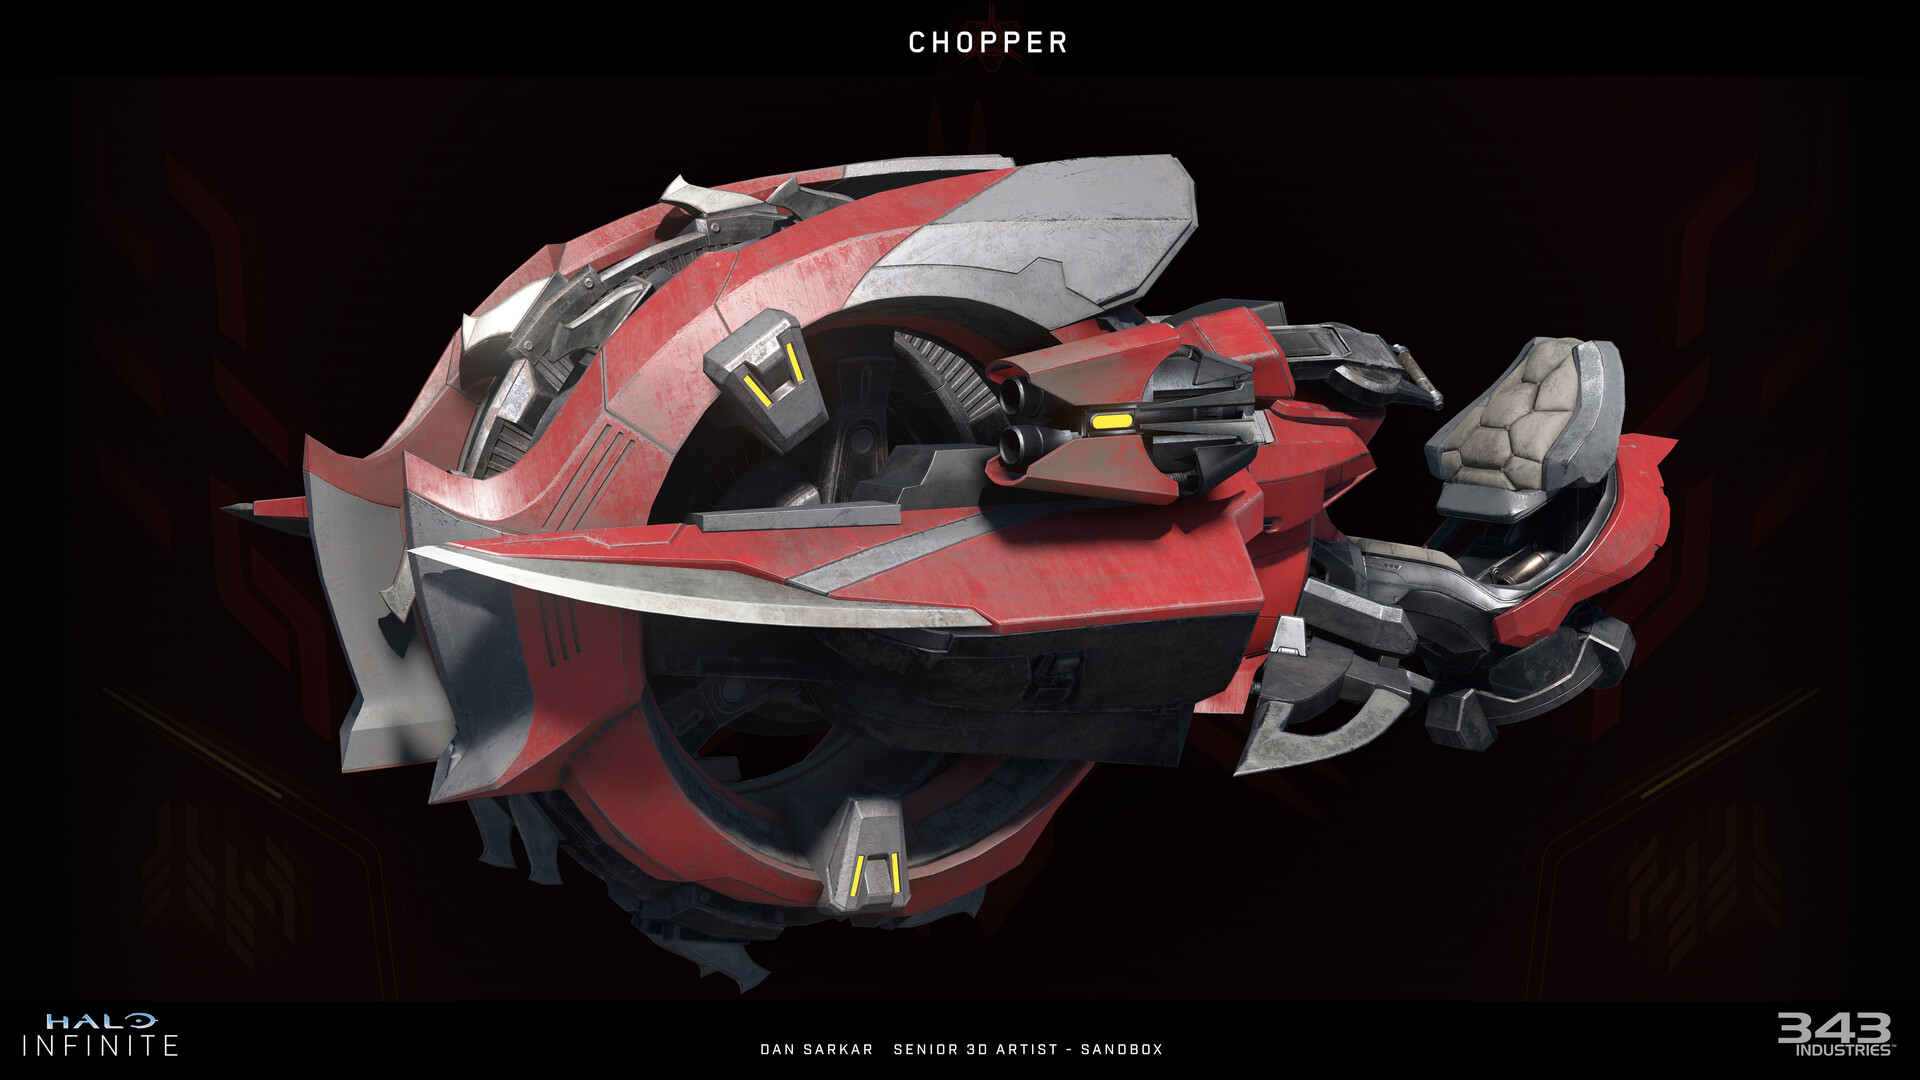 HINF-Chopper render 01 (Dan Sarkar).jpg